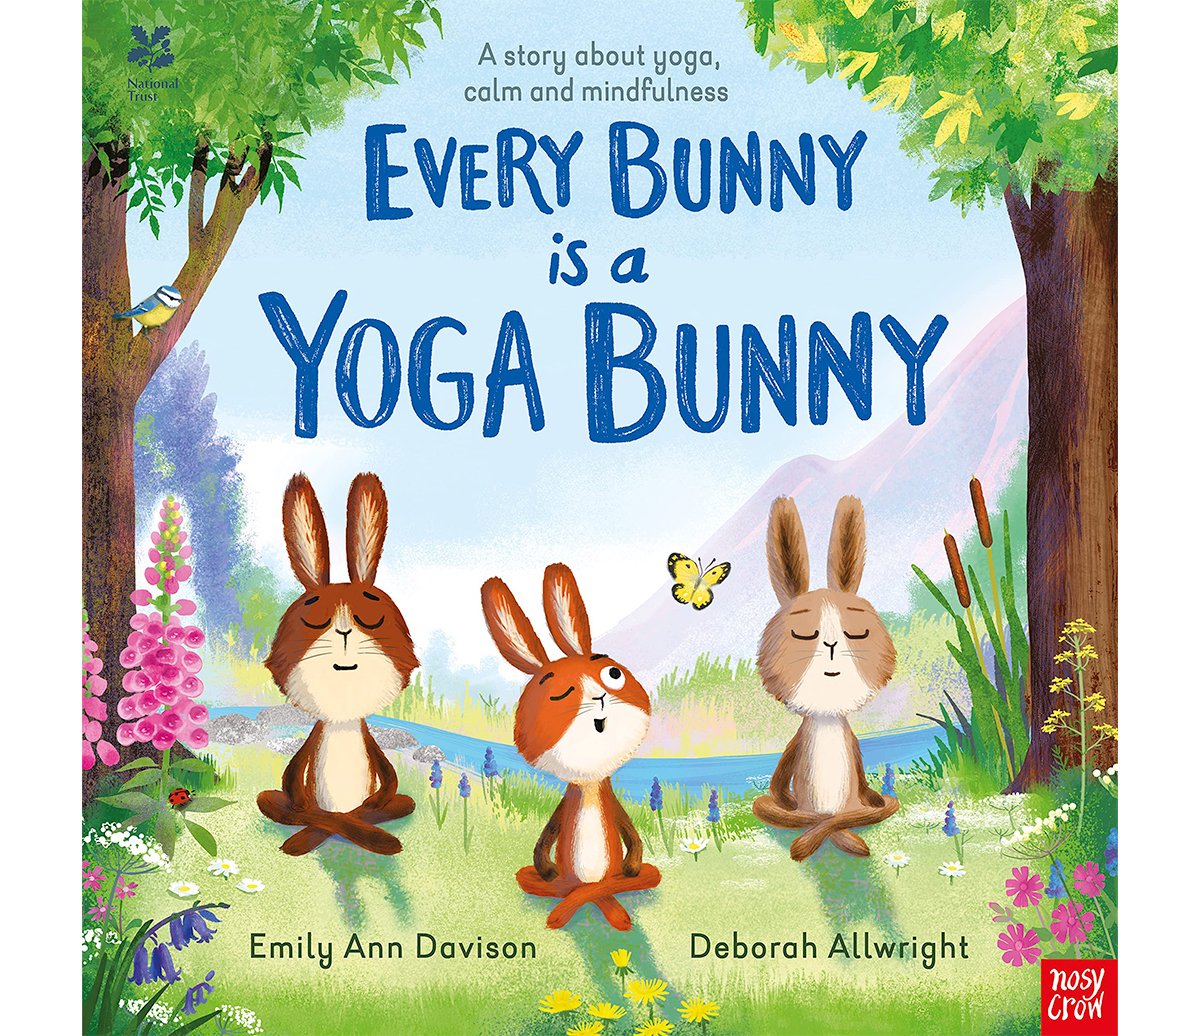 deborah-allwright-yoga-bunny-cover.jpg